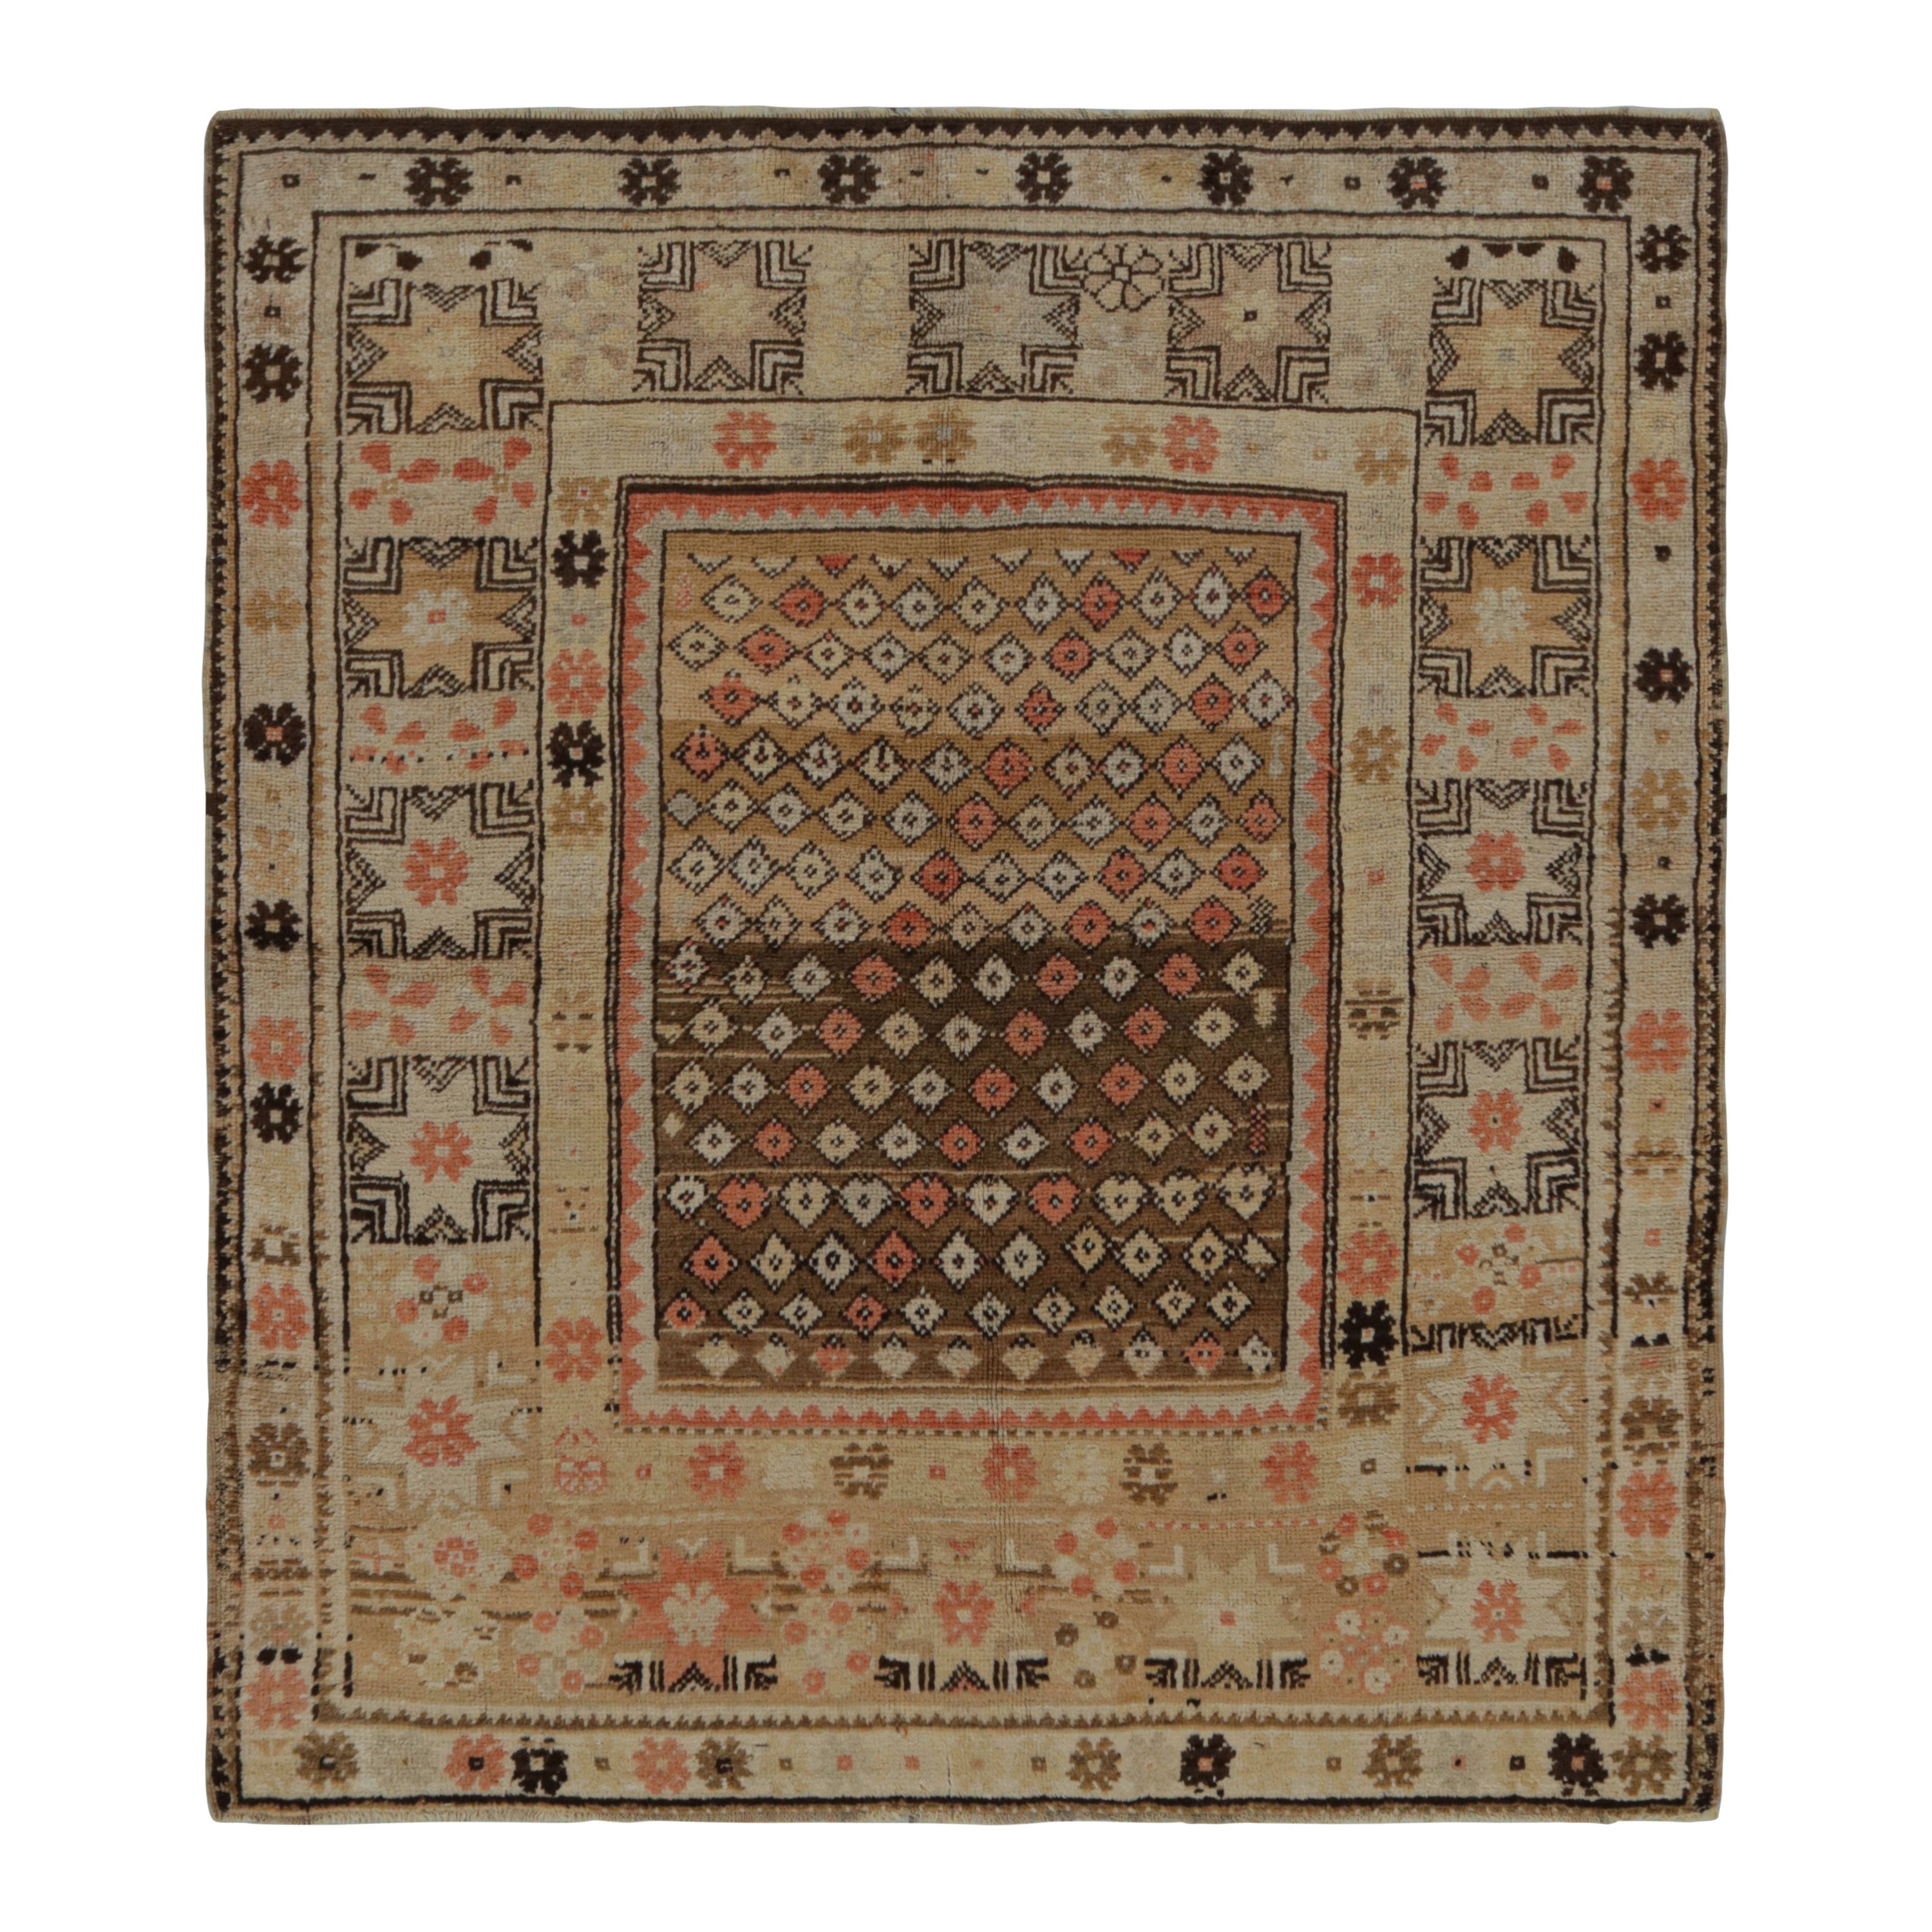 Antique Oushak rug in Beige-Brown Tribal Patterns by Rug & Kilim For Sale